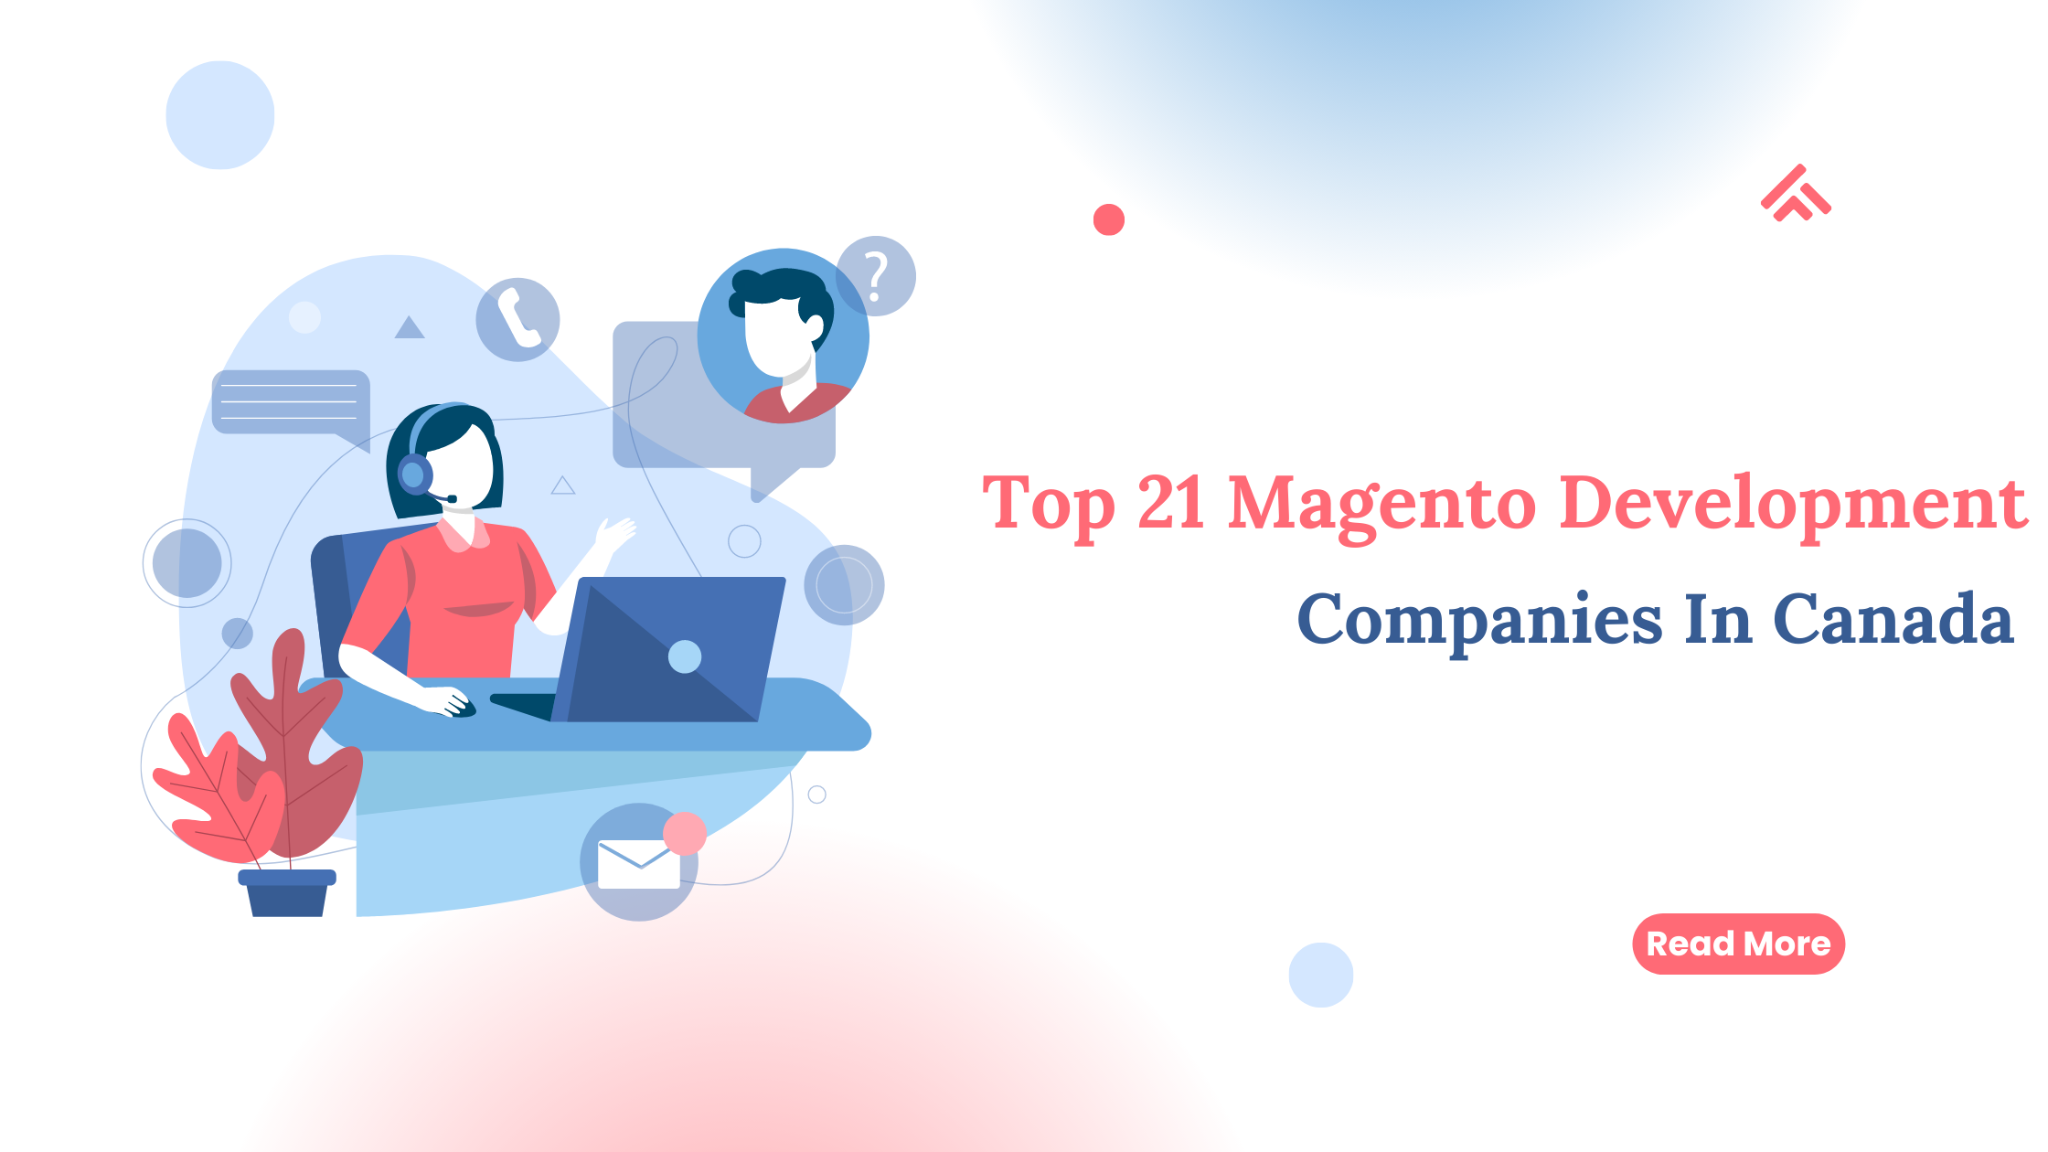 Top 21 Magento Development Companies In Canada